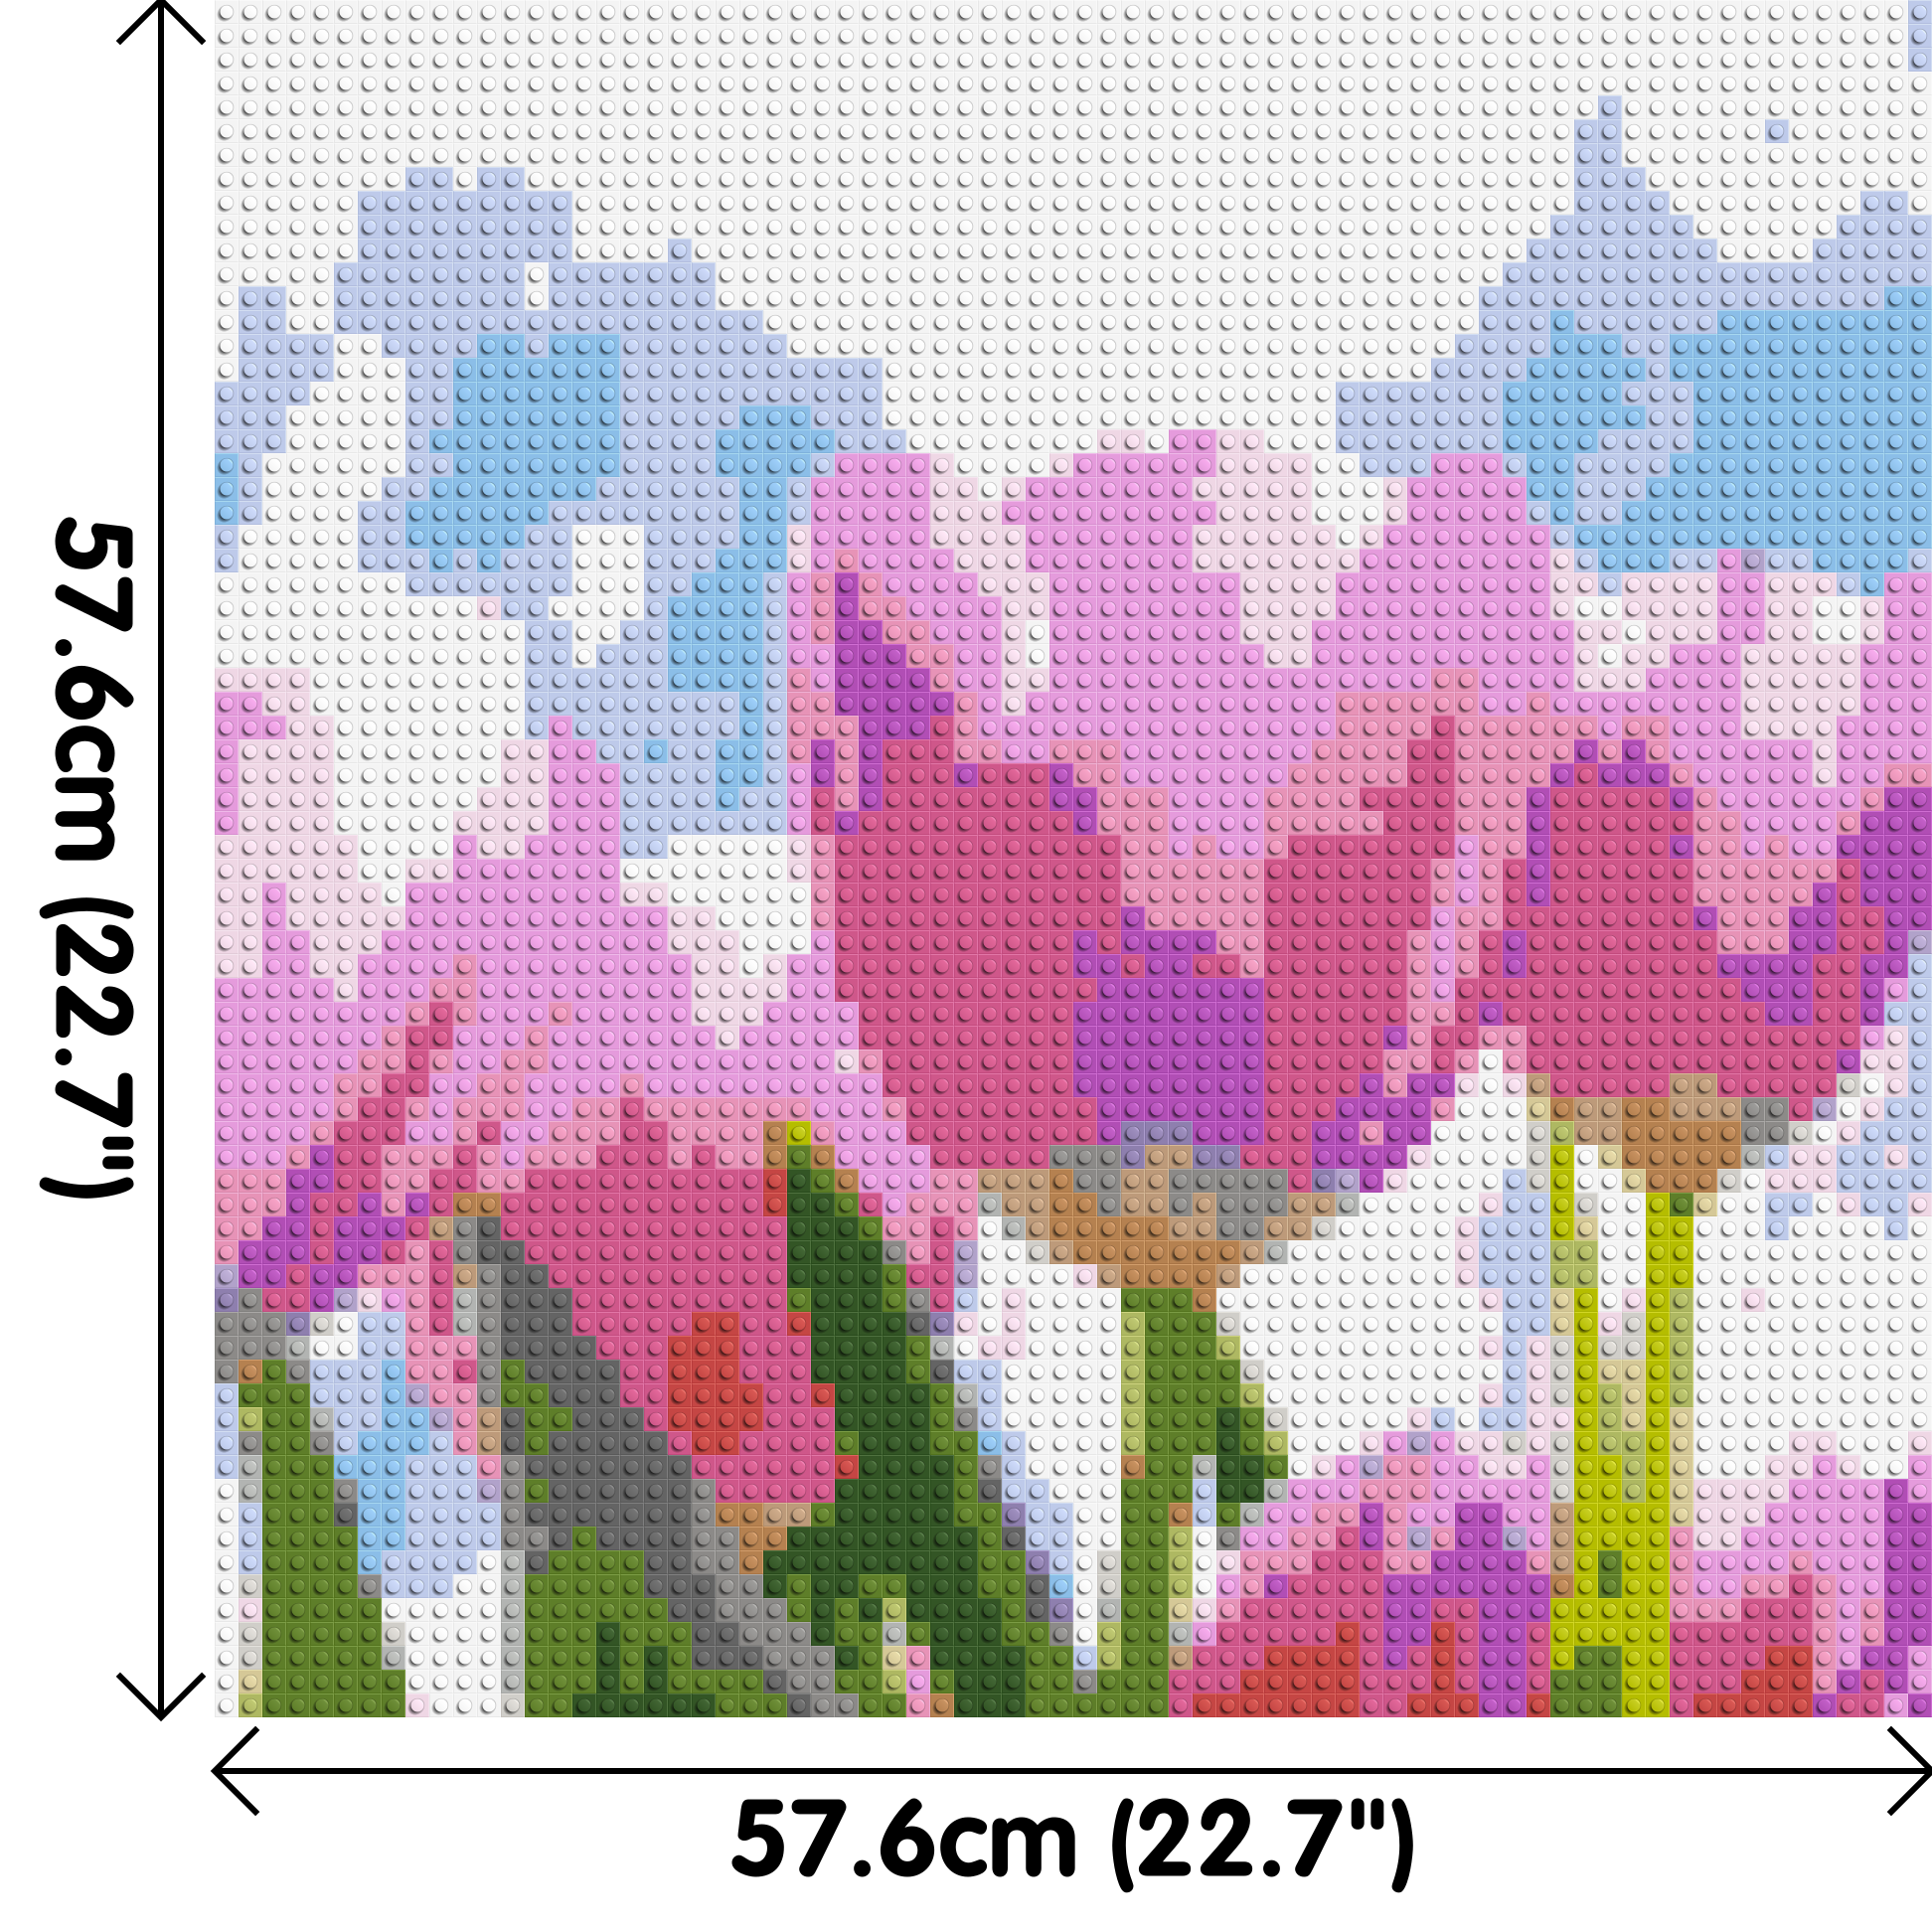 Pink Tulips - Brick Art Mosaic Kit 3x3 dimensions